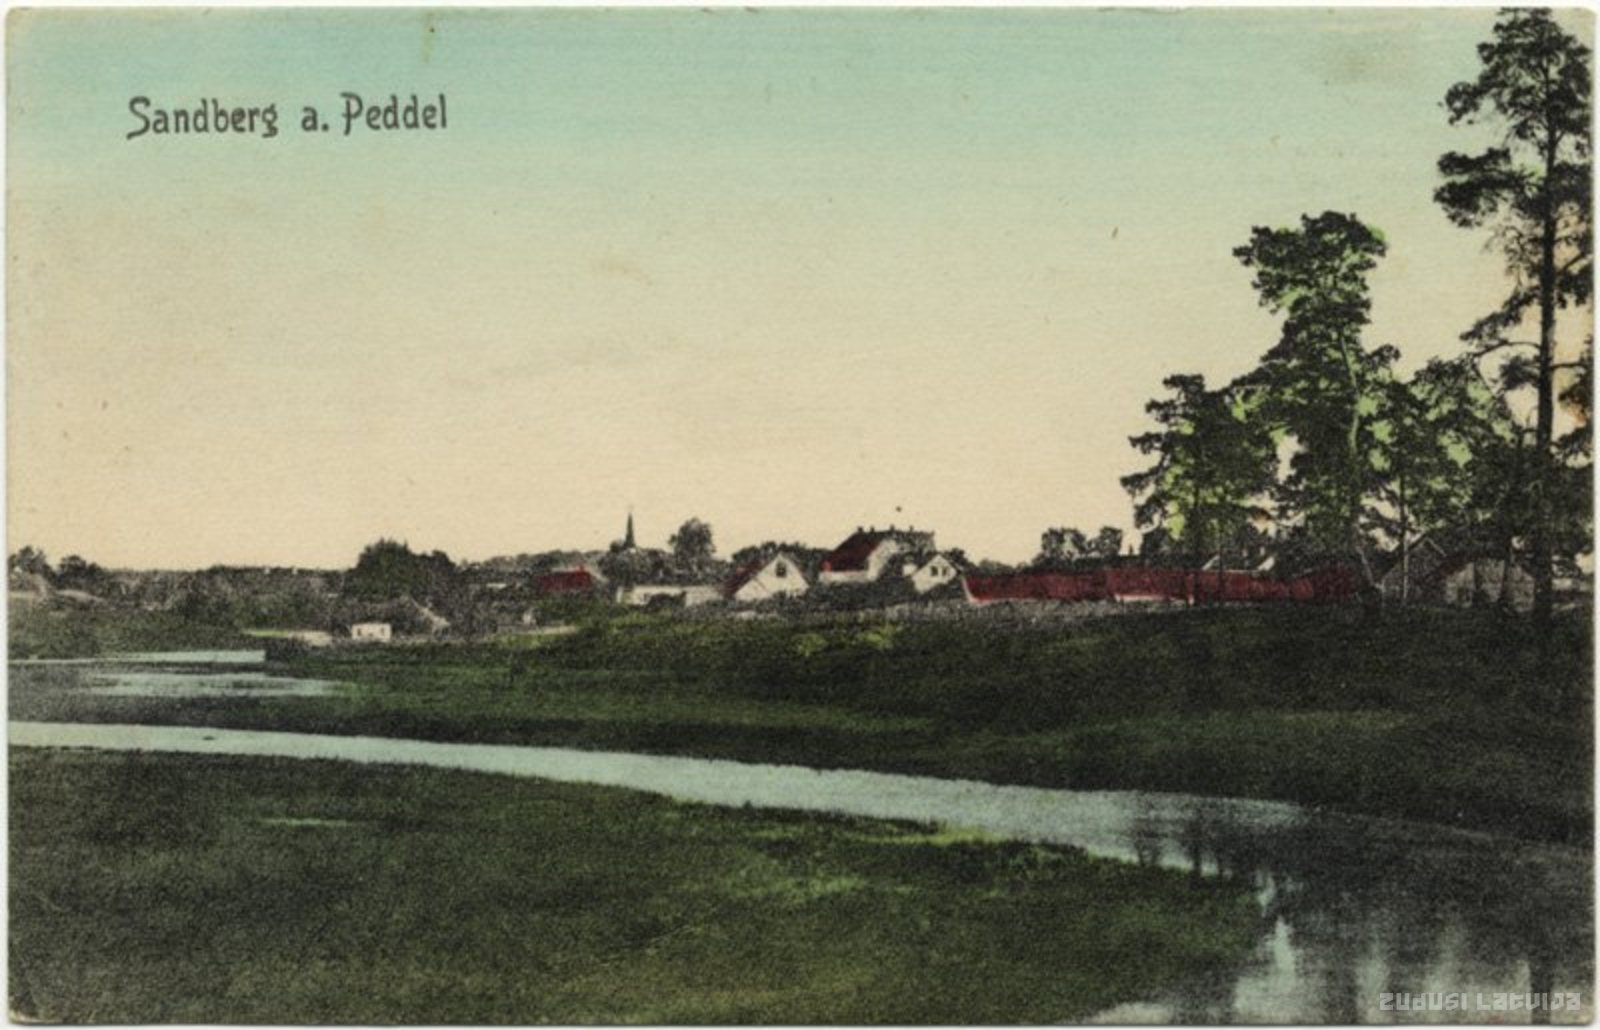 Sandberg a. Peddel, Valka. Pedeles River